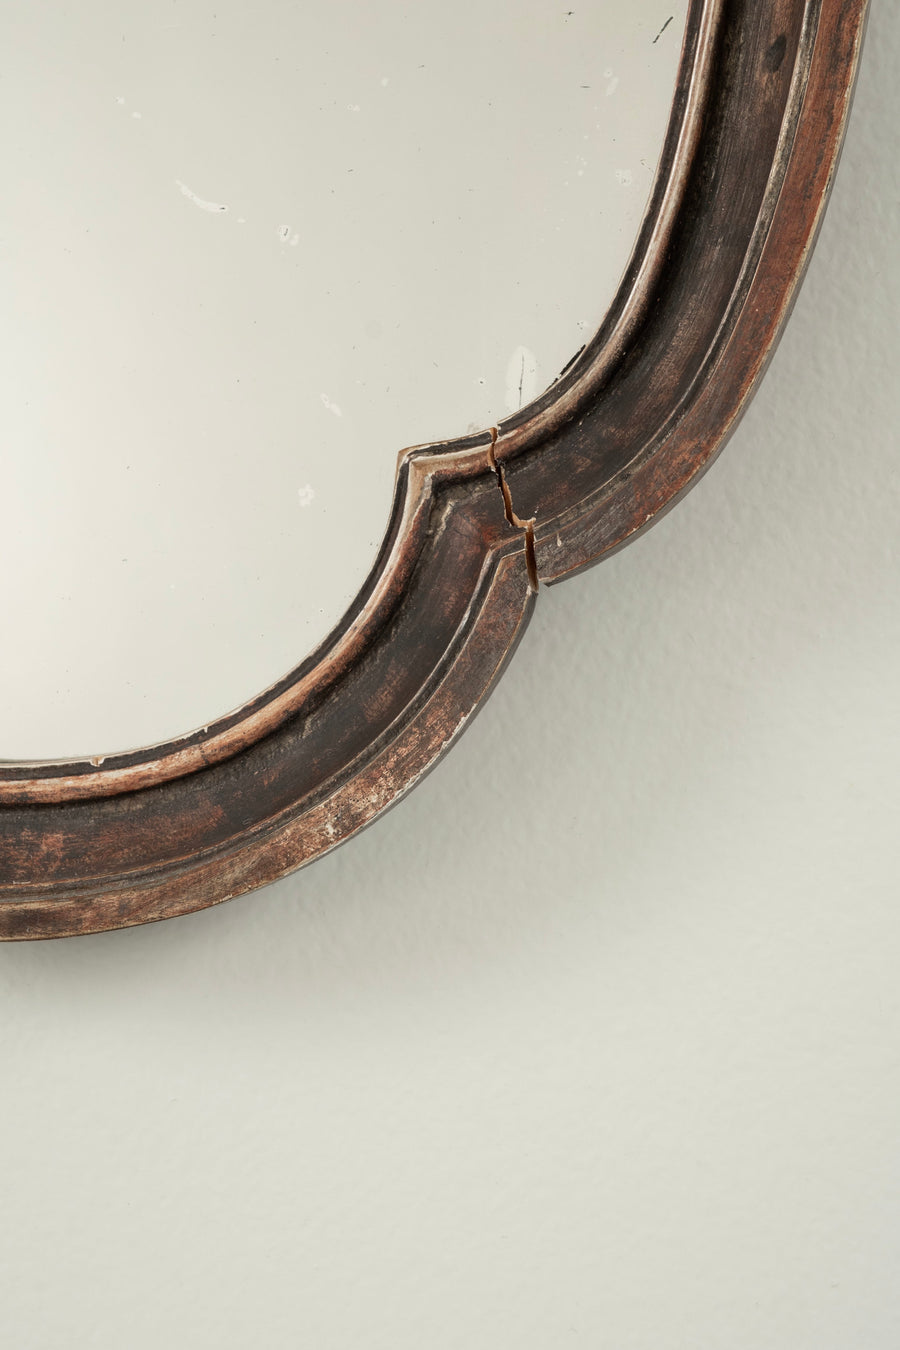 Pair 18th Century Ram Head Mirrors